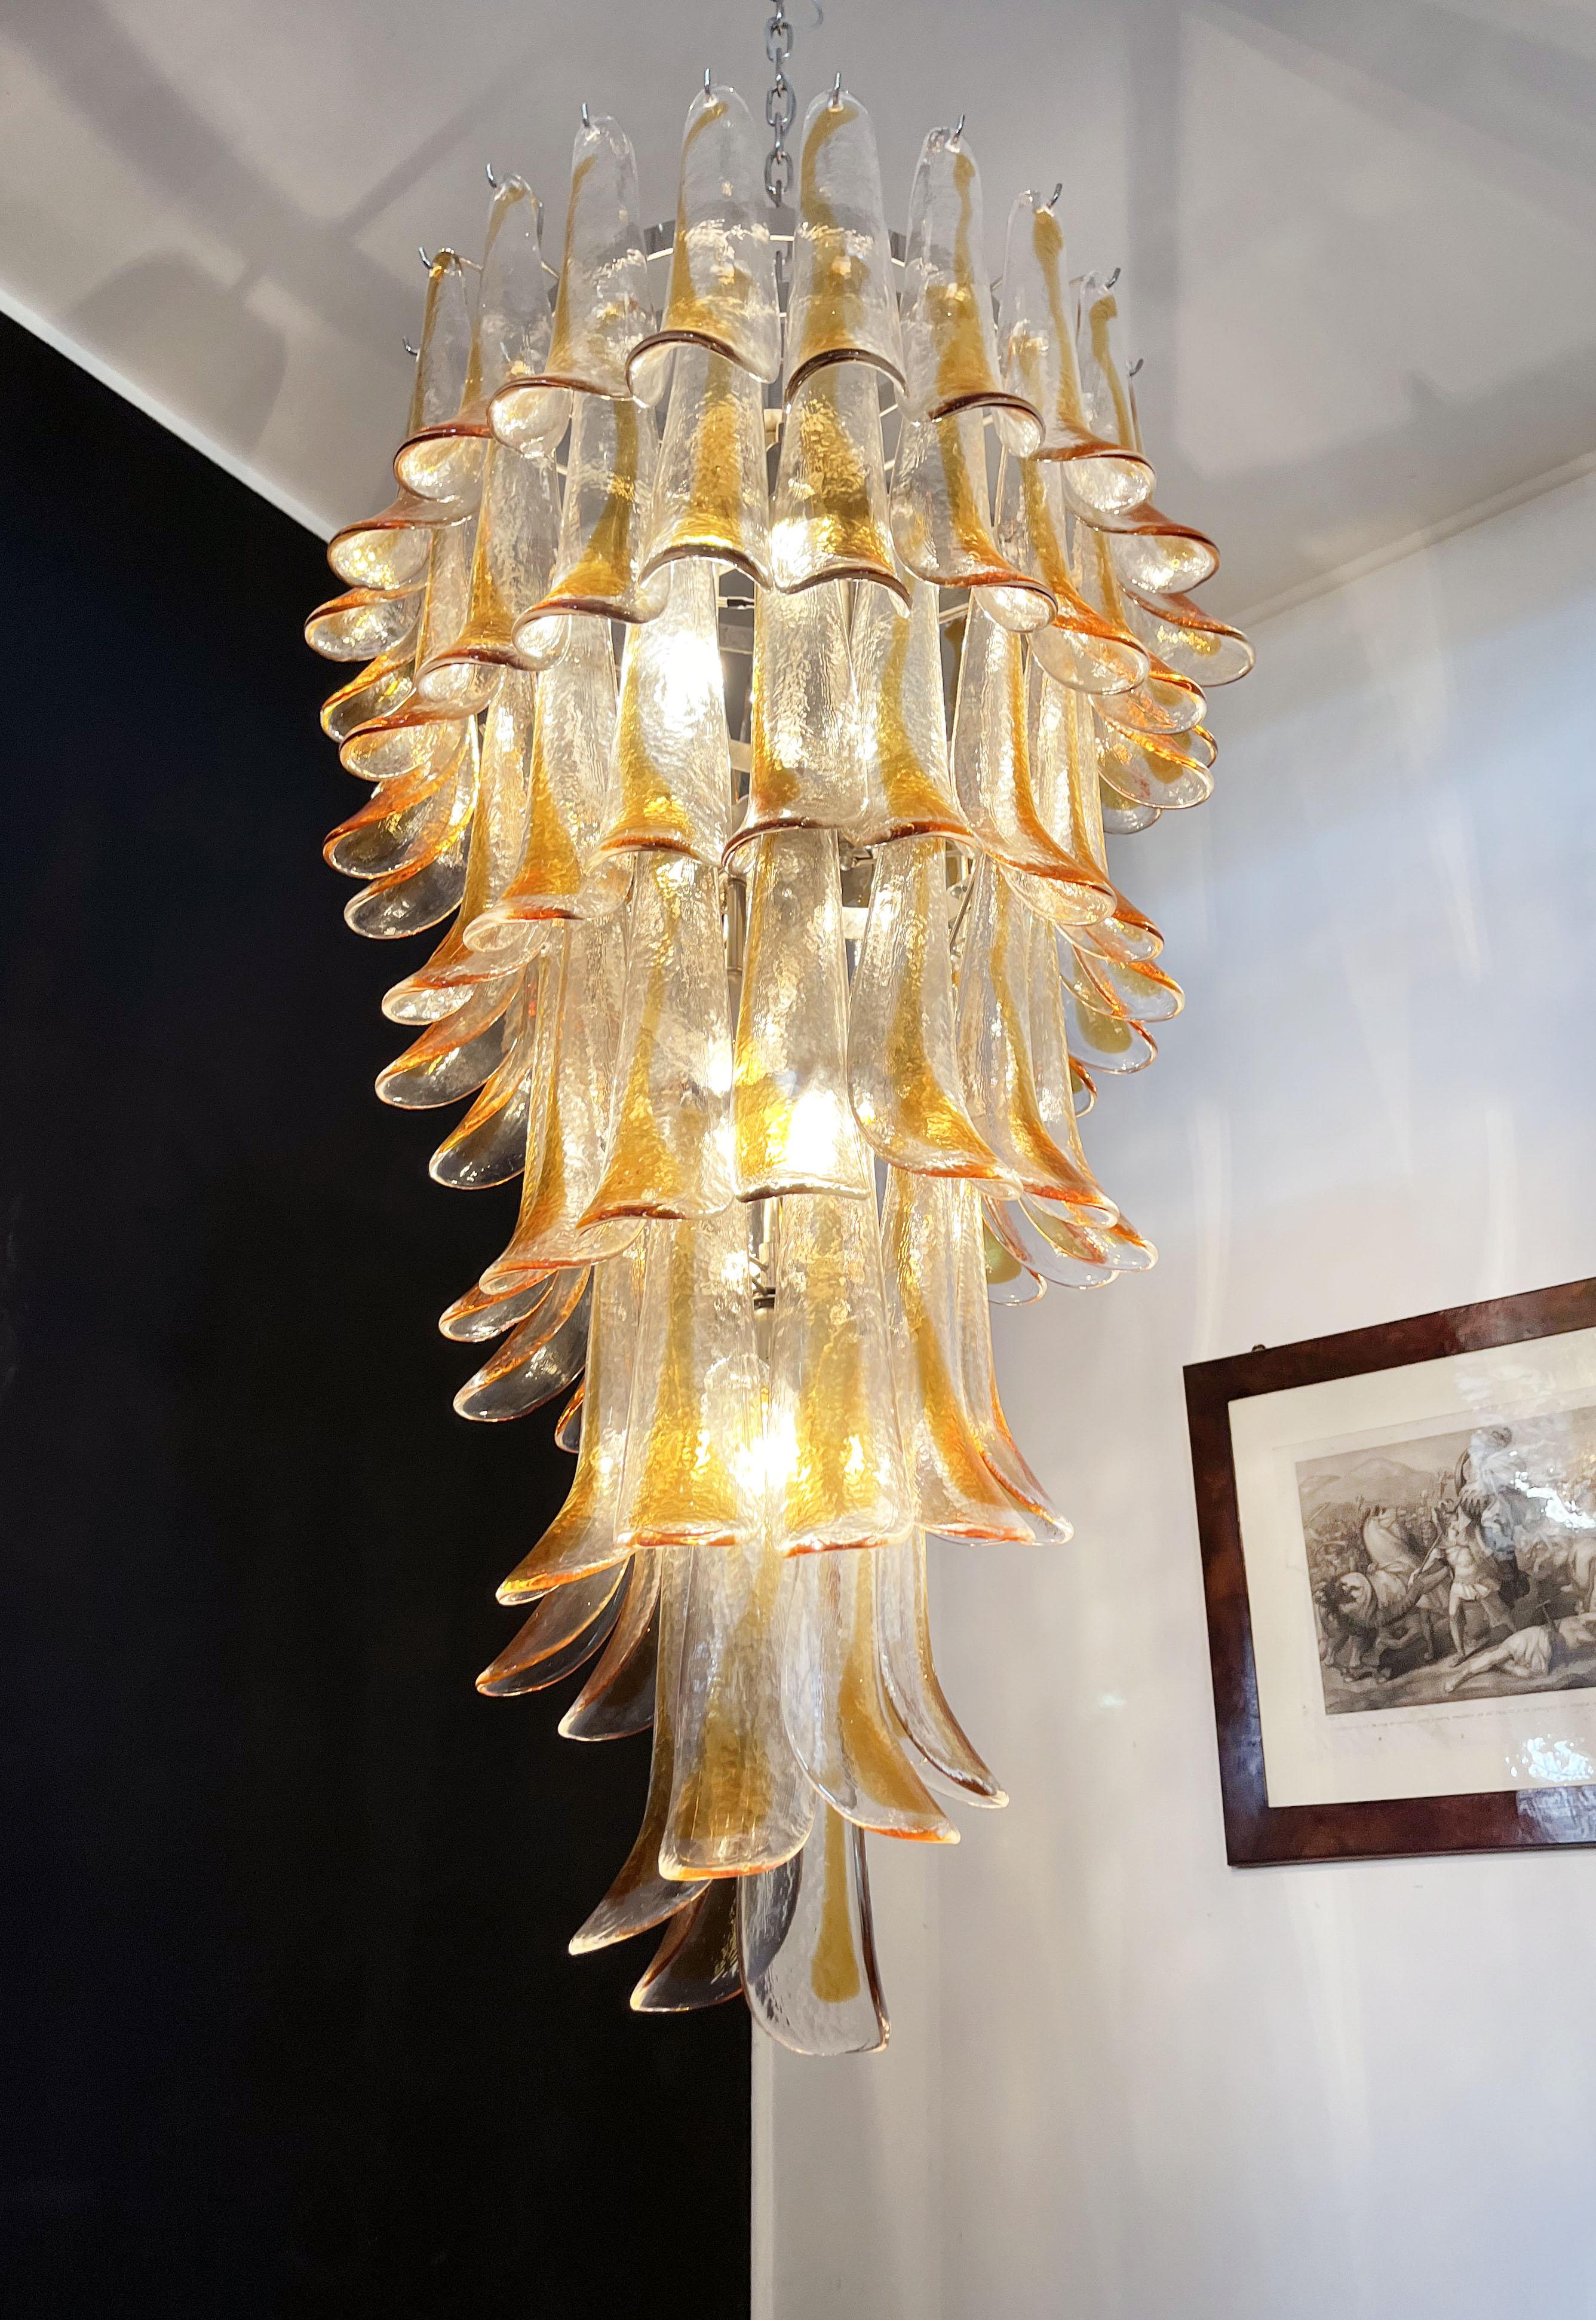 Huge Italian Murano Glass Spiral Chandelier, 83 Amber and Clear Glass Petals In Good Condition For Sale In Gaiarine Frazione Francenigo (TV), IT